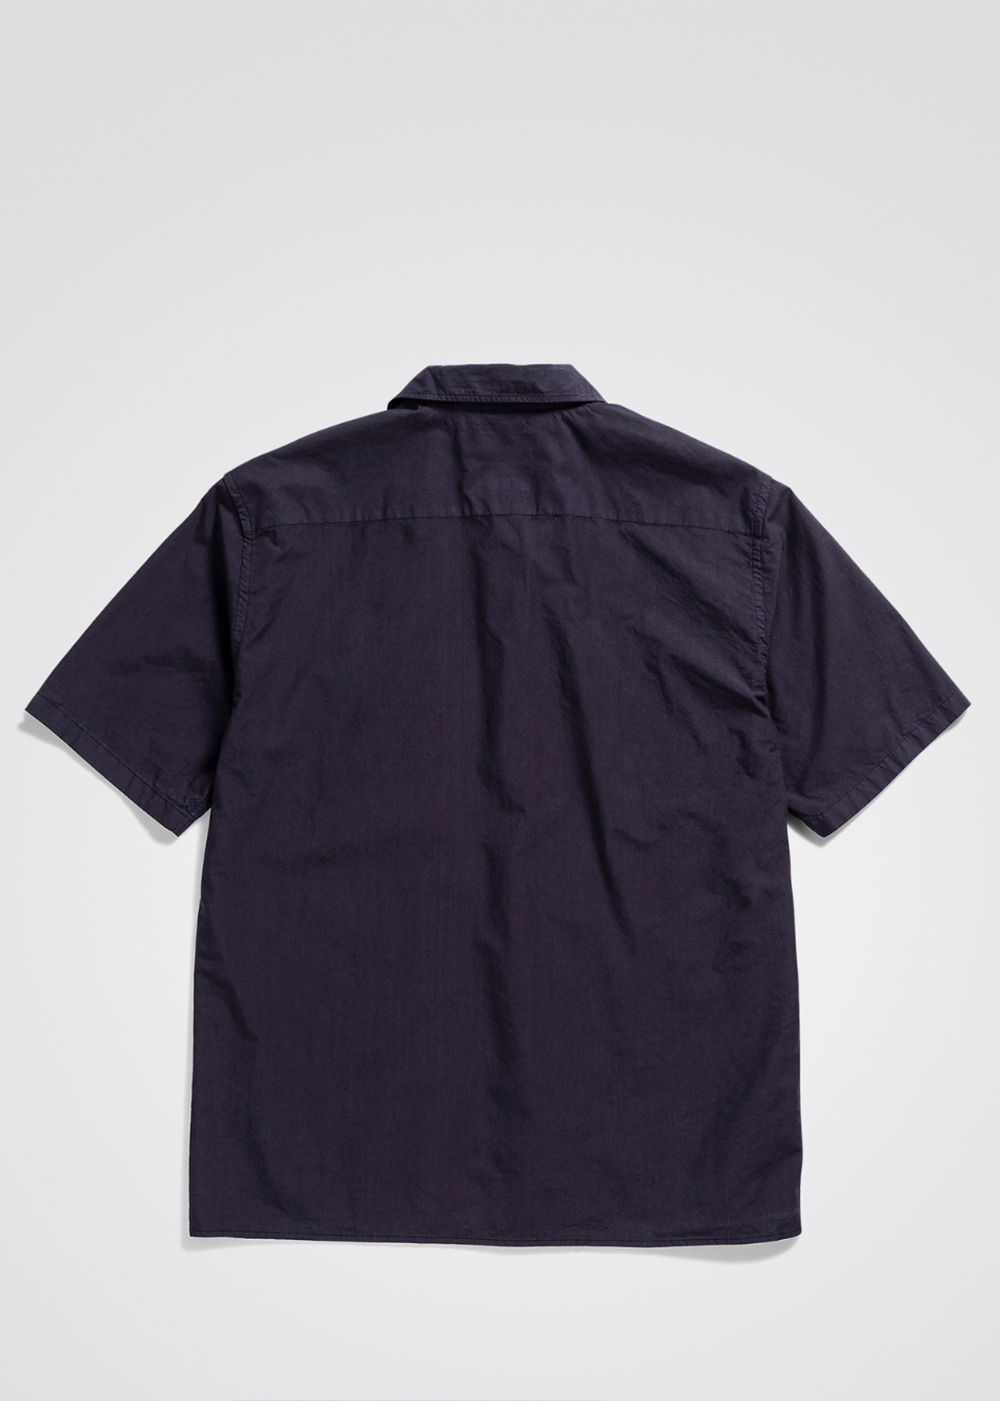 Carsten Cotton Tencel Shirt - Dark Navy - Norse Projects Canada - Danali - N40-0579